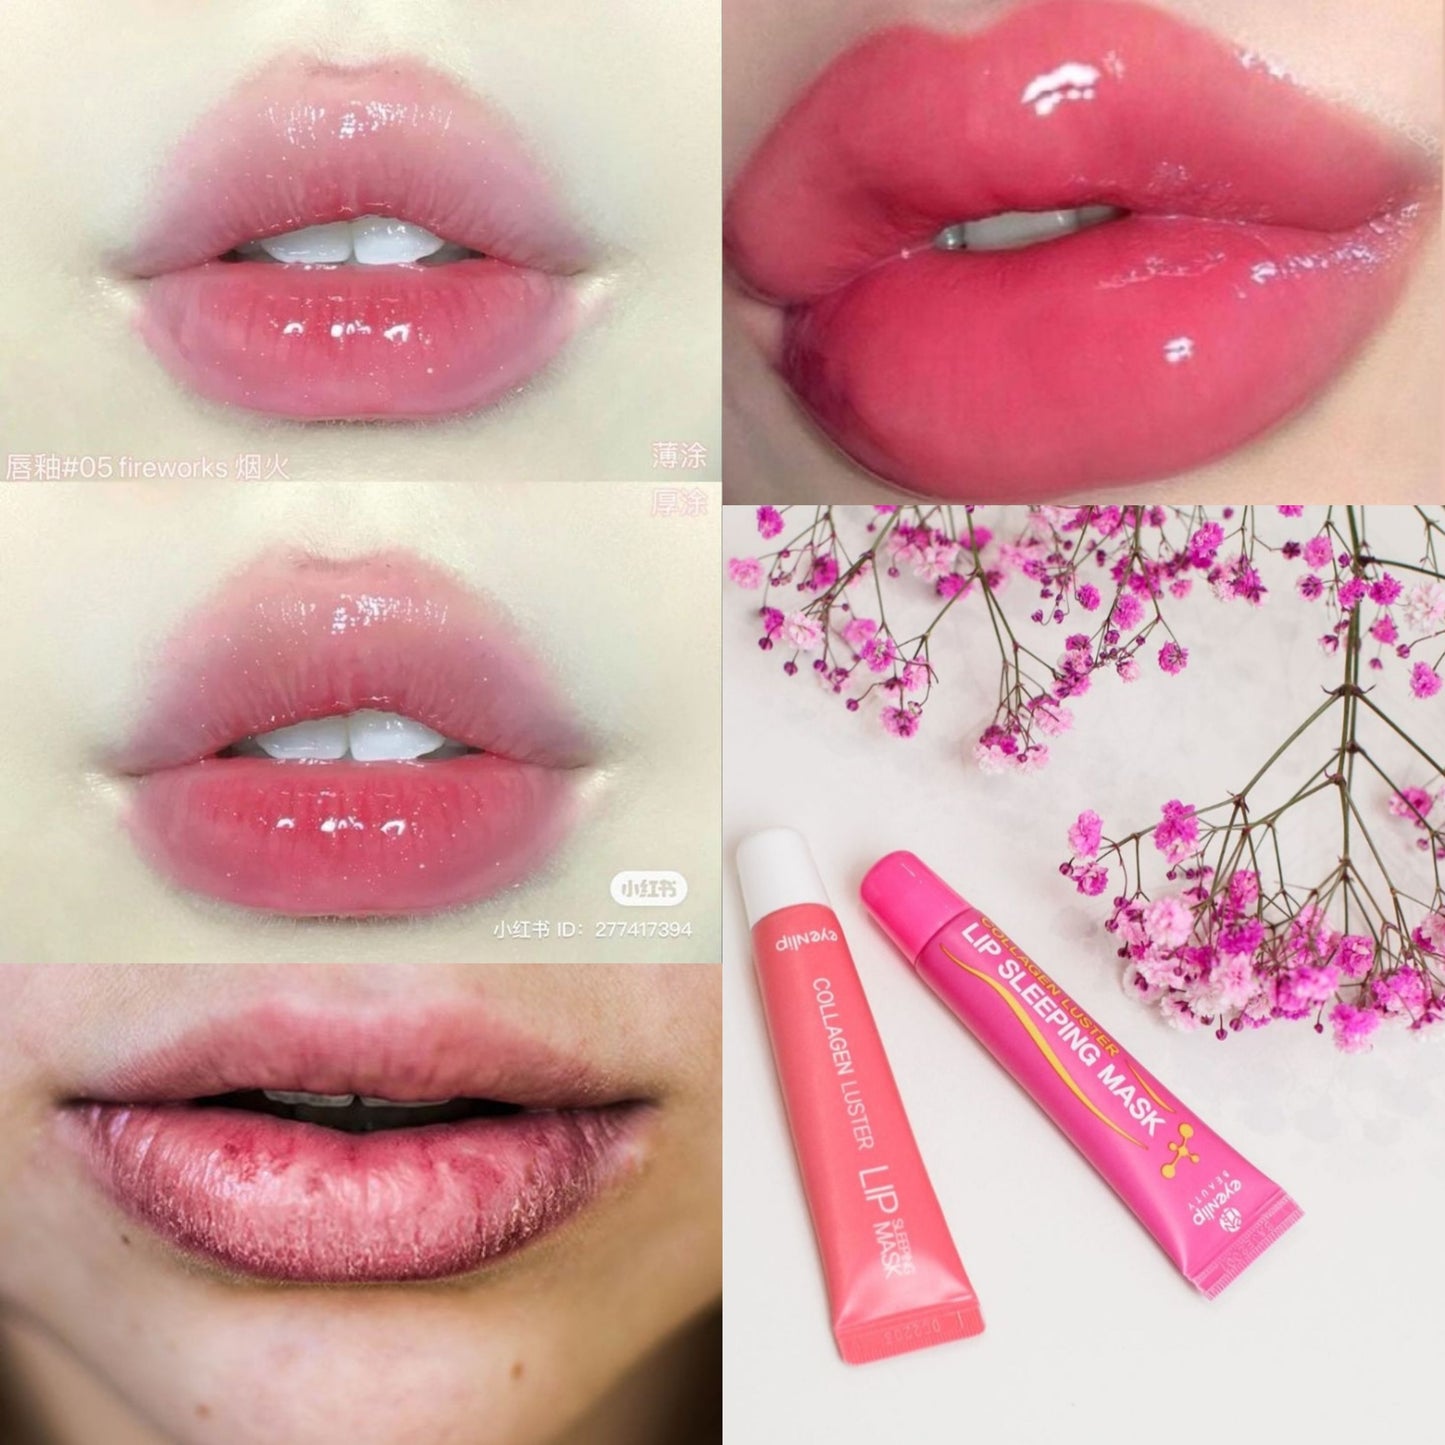 Eyenlip Collagen luster lip mask🥞🍓معالج الفراولة للشفاه بالمولاجين